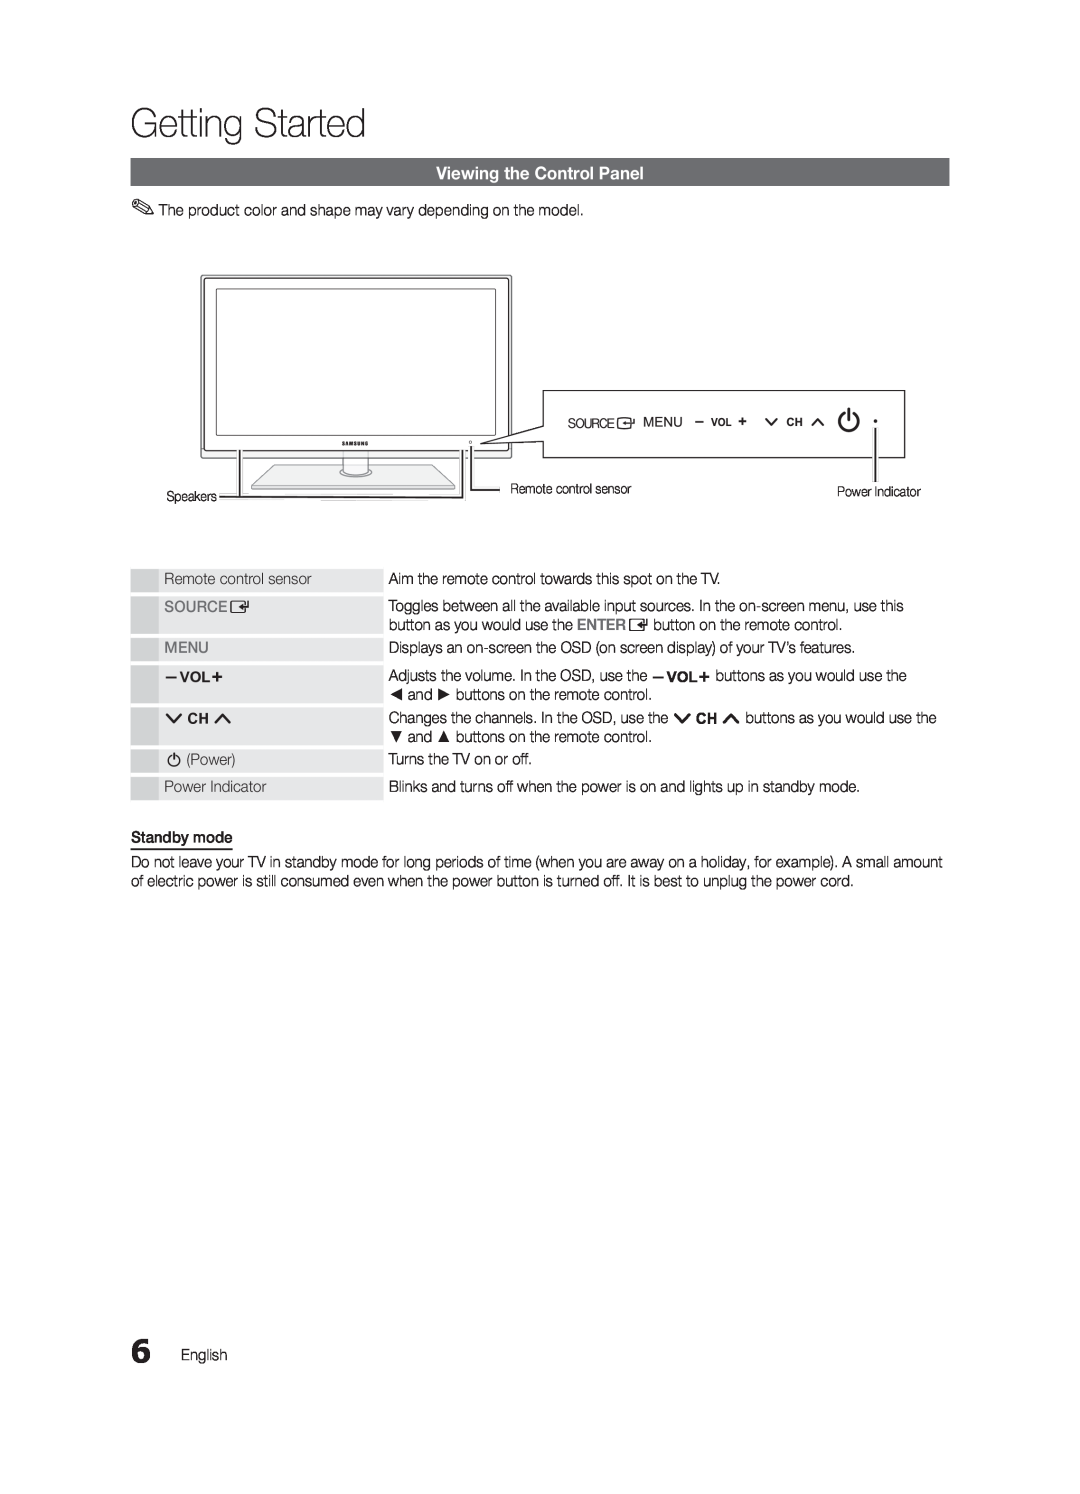 Samsung BN68-03004B-02, UC5000-ZC user manual Viewing the Control Panel, Source E, Menu, Getting Started 